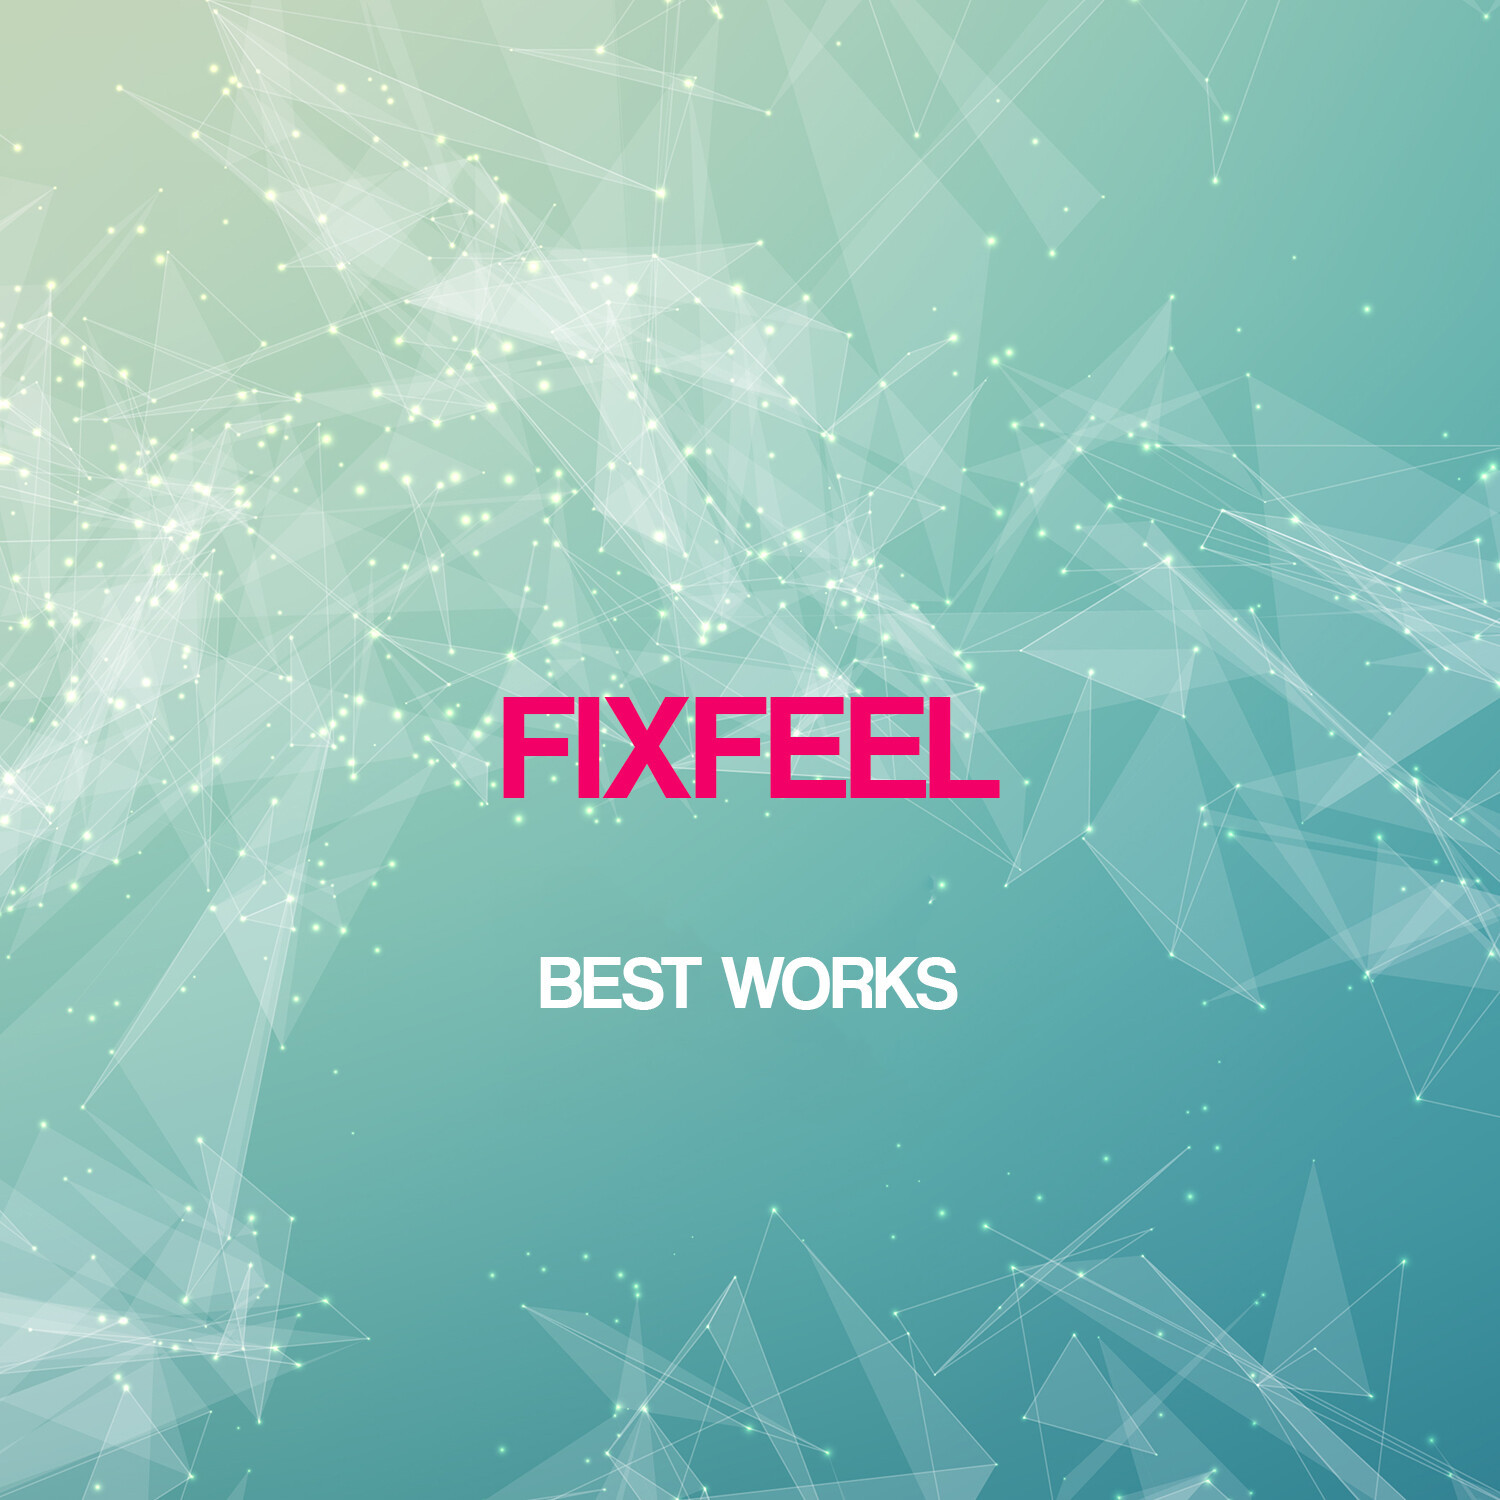 Fixfeel Best Works